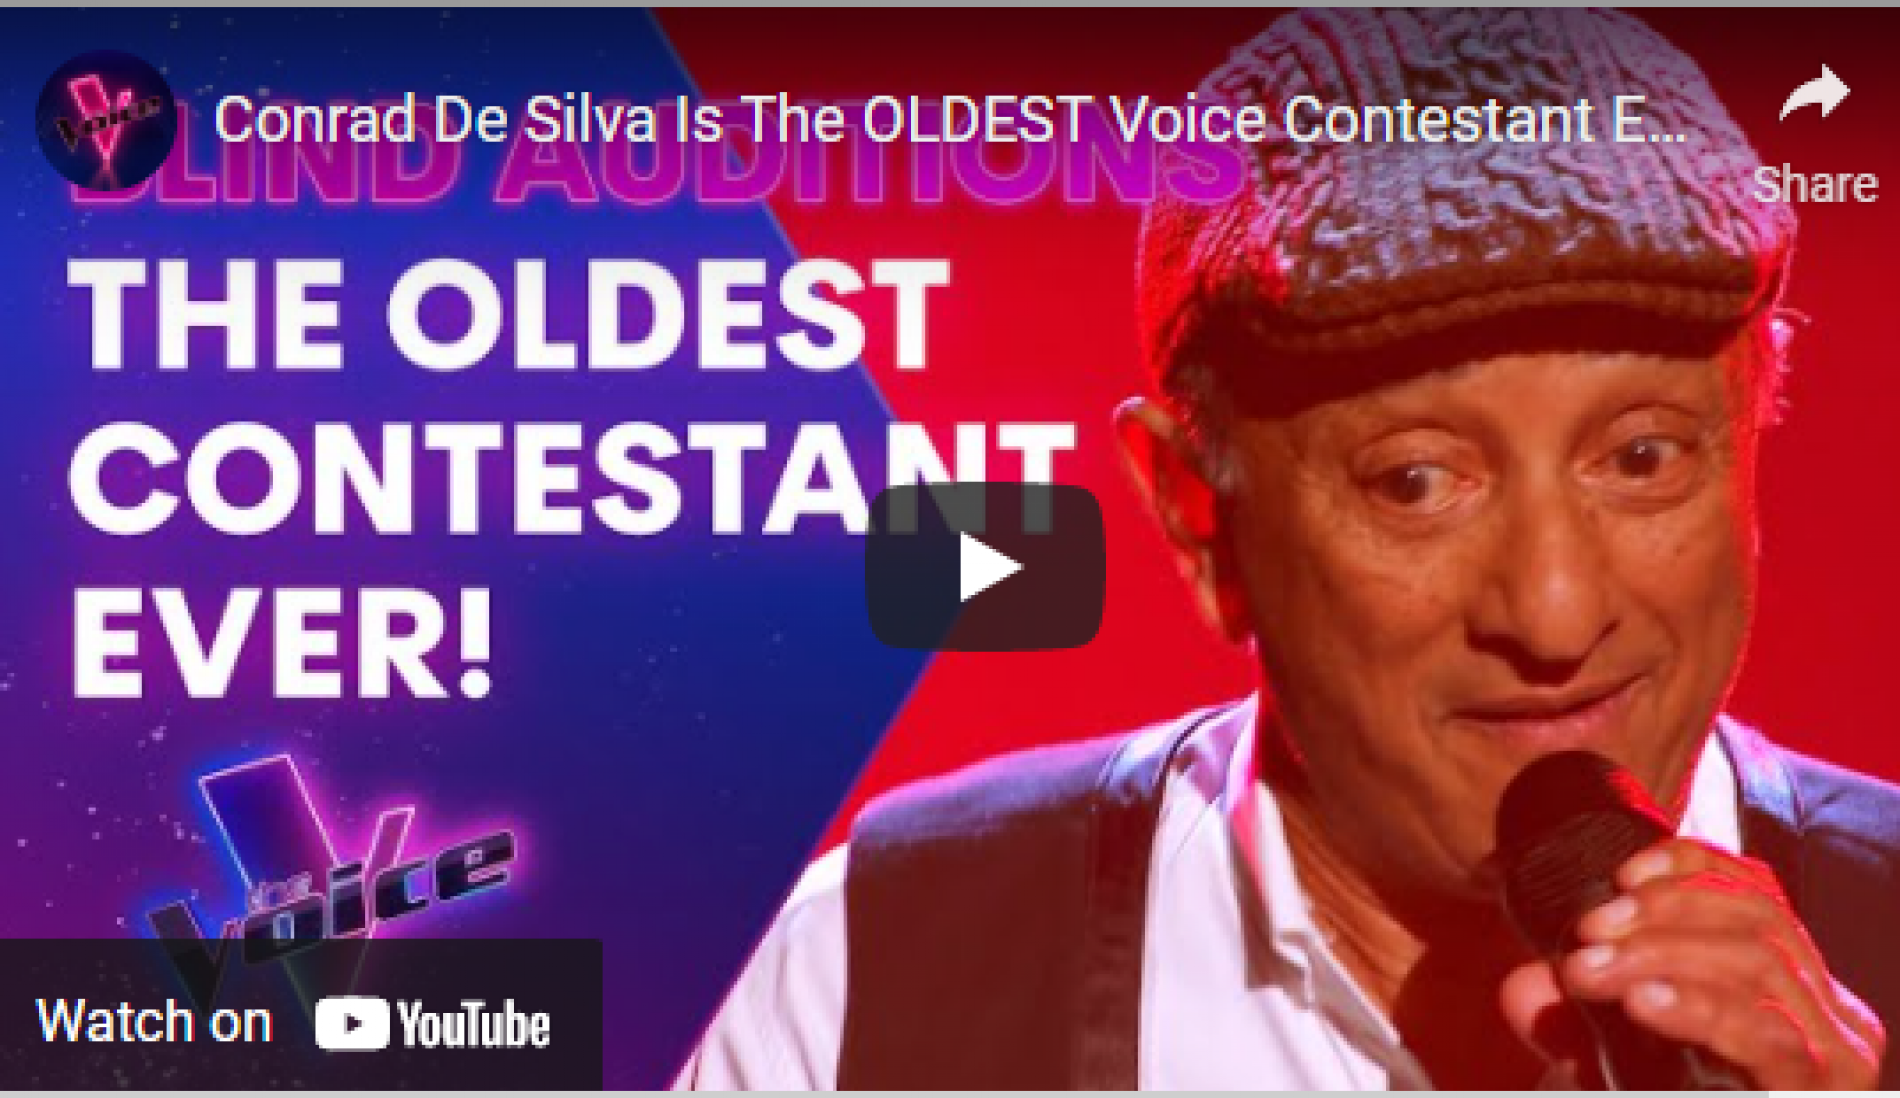 News : Conrad De Silva Becomes The Oldest Contestant On The Voice Australia!